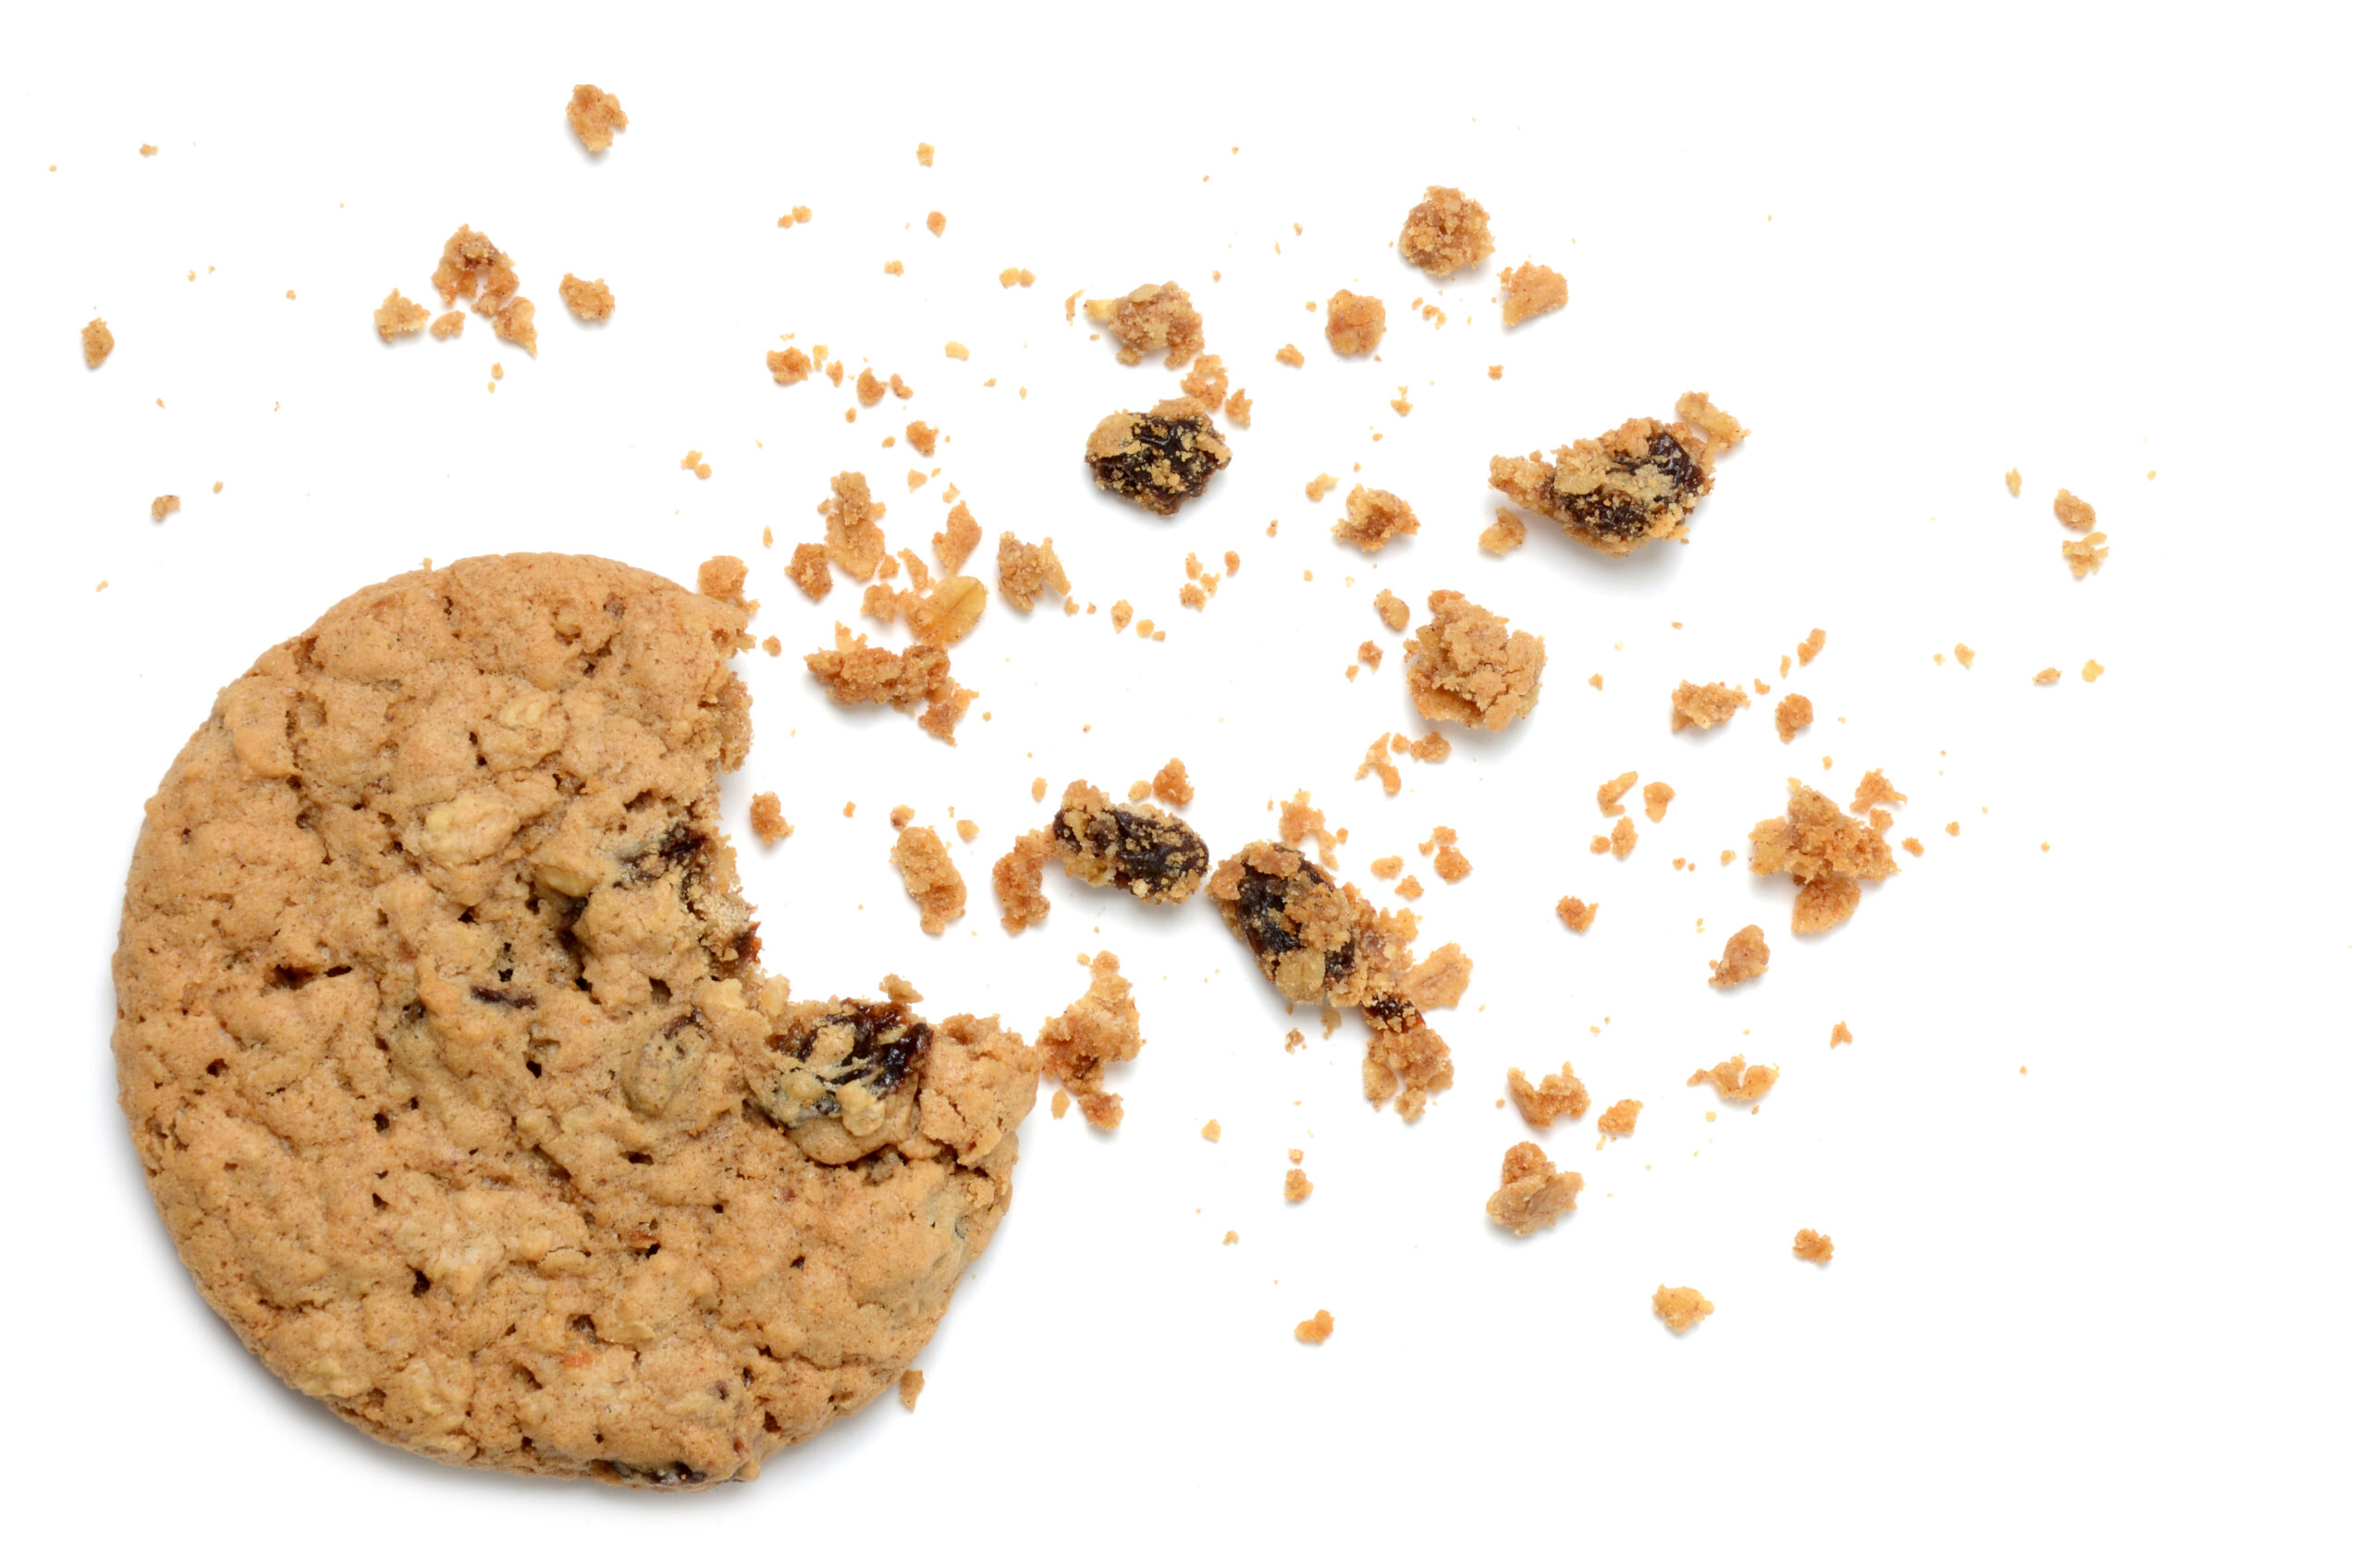 Crumbling cookie